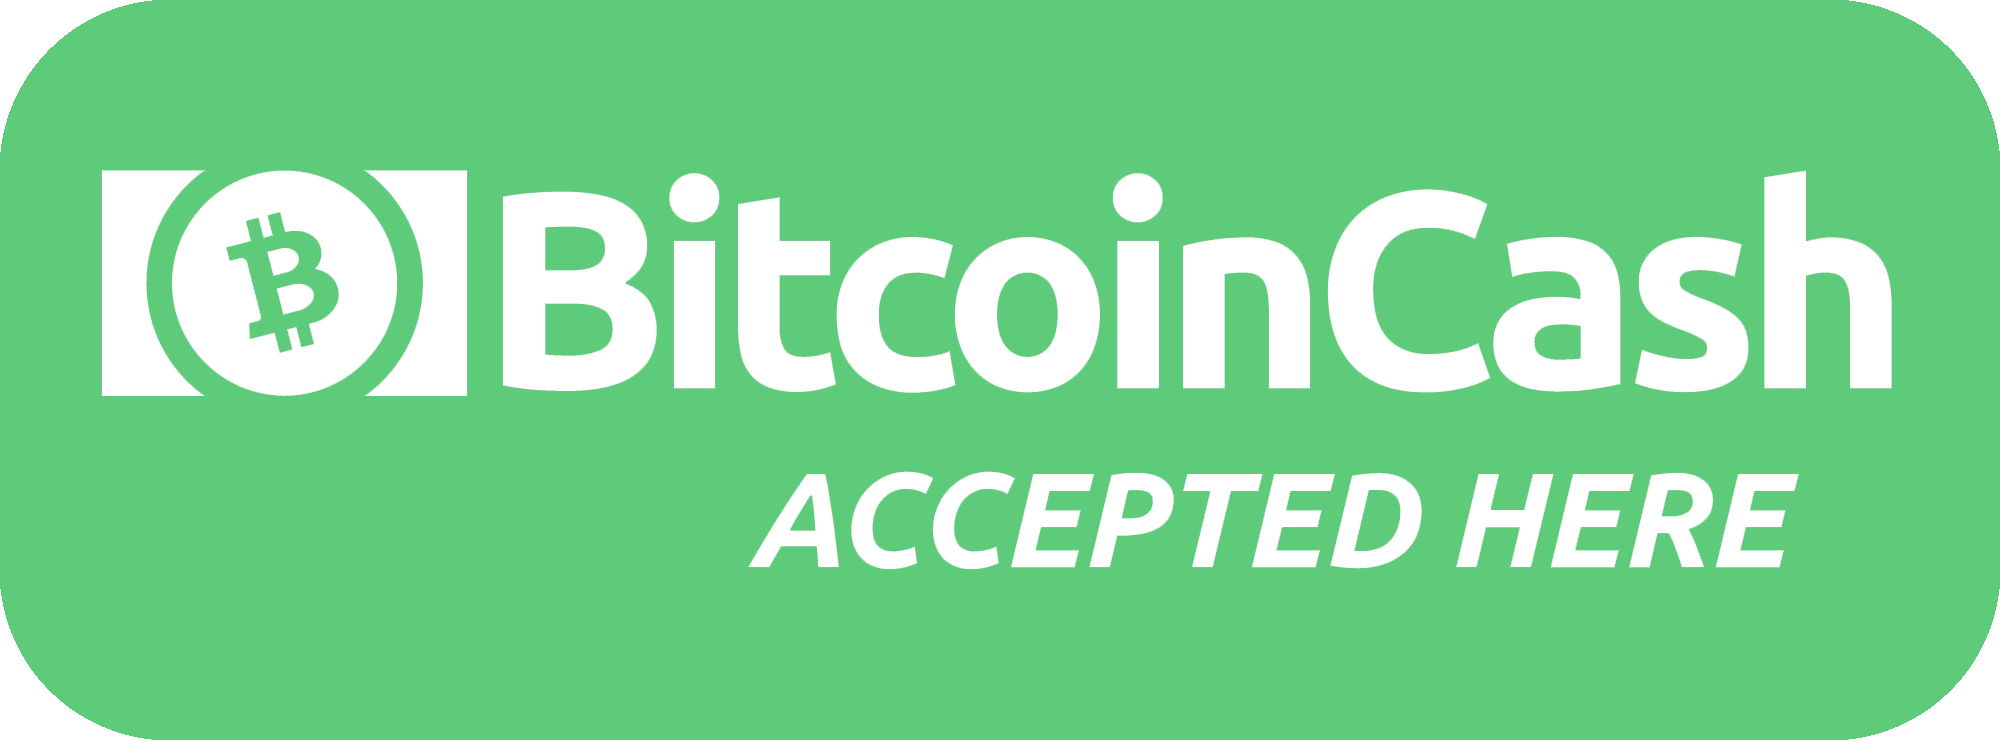 8 Green Logo - Bitcoin.com. Bitcoin Cash Logos and Brand Assets